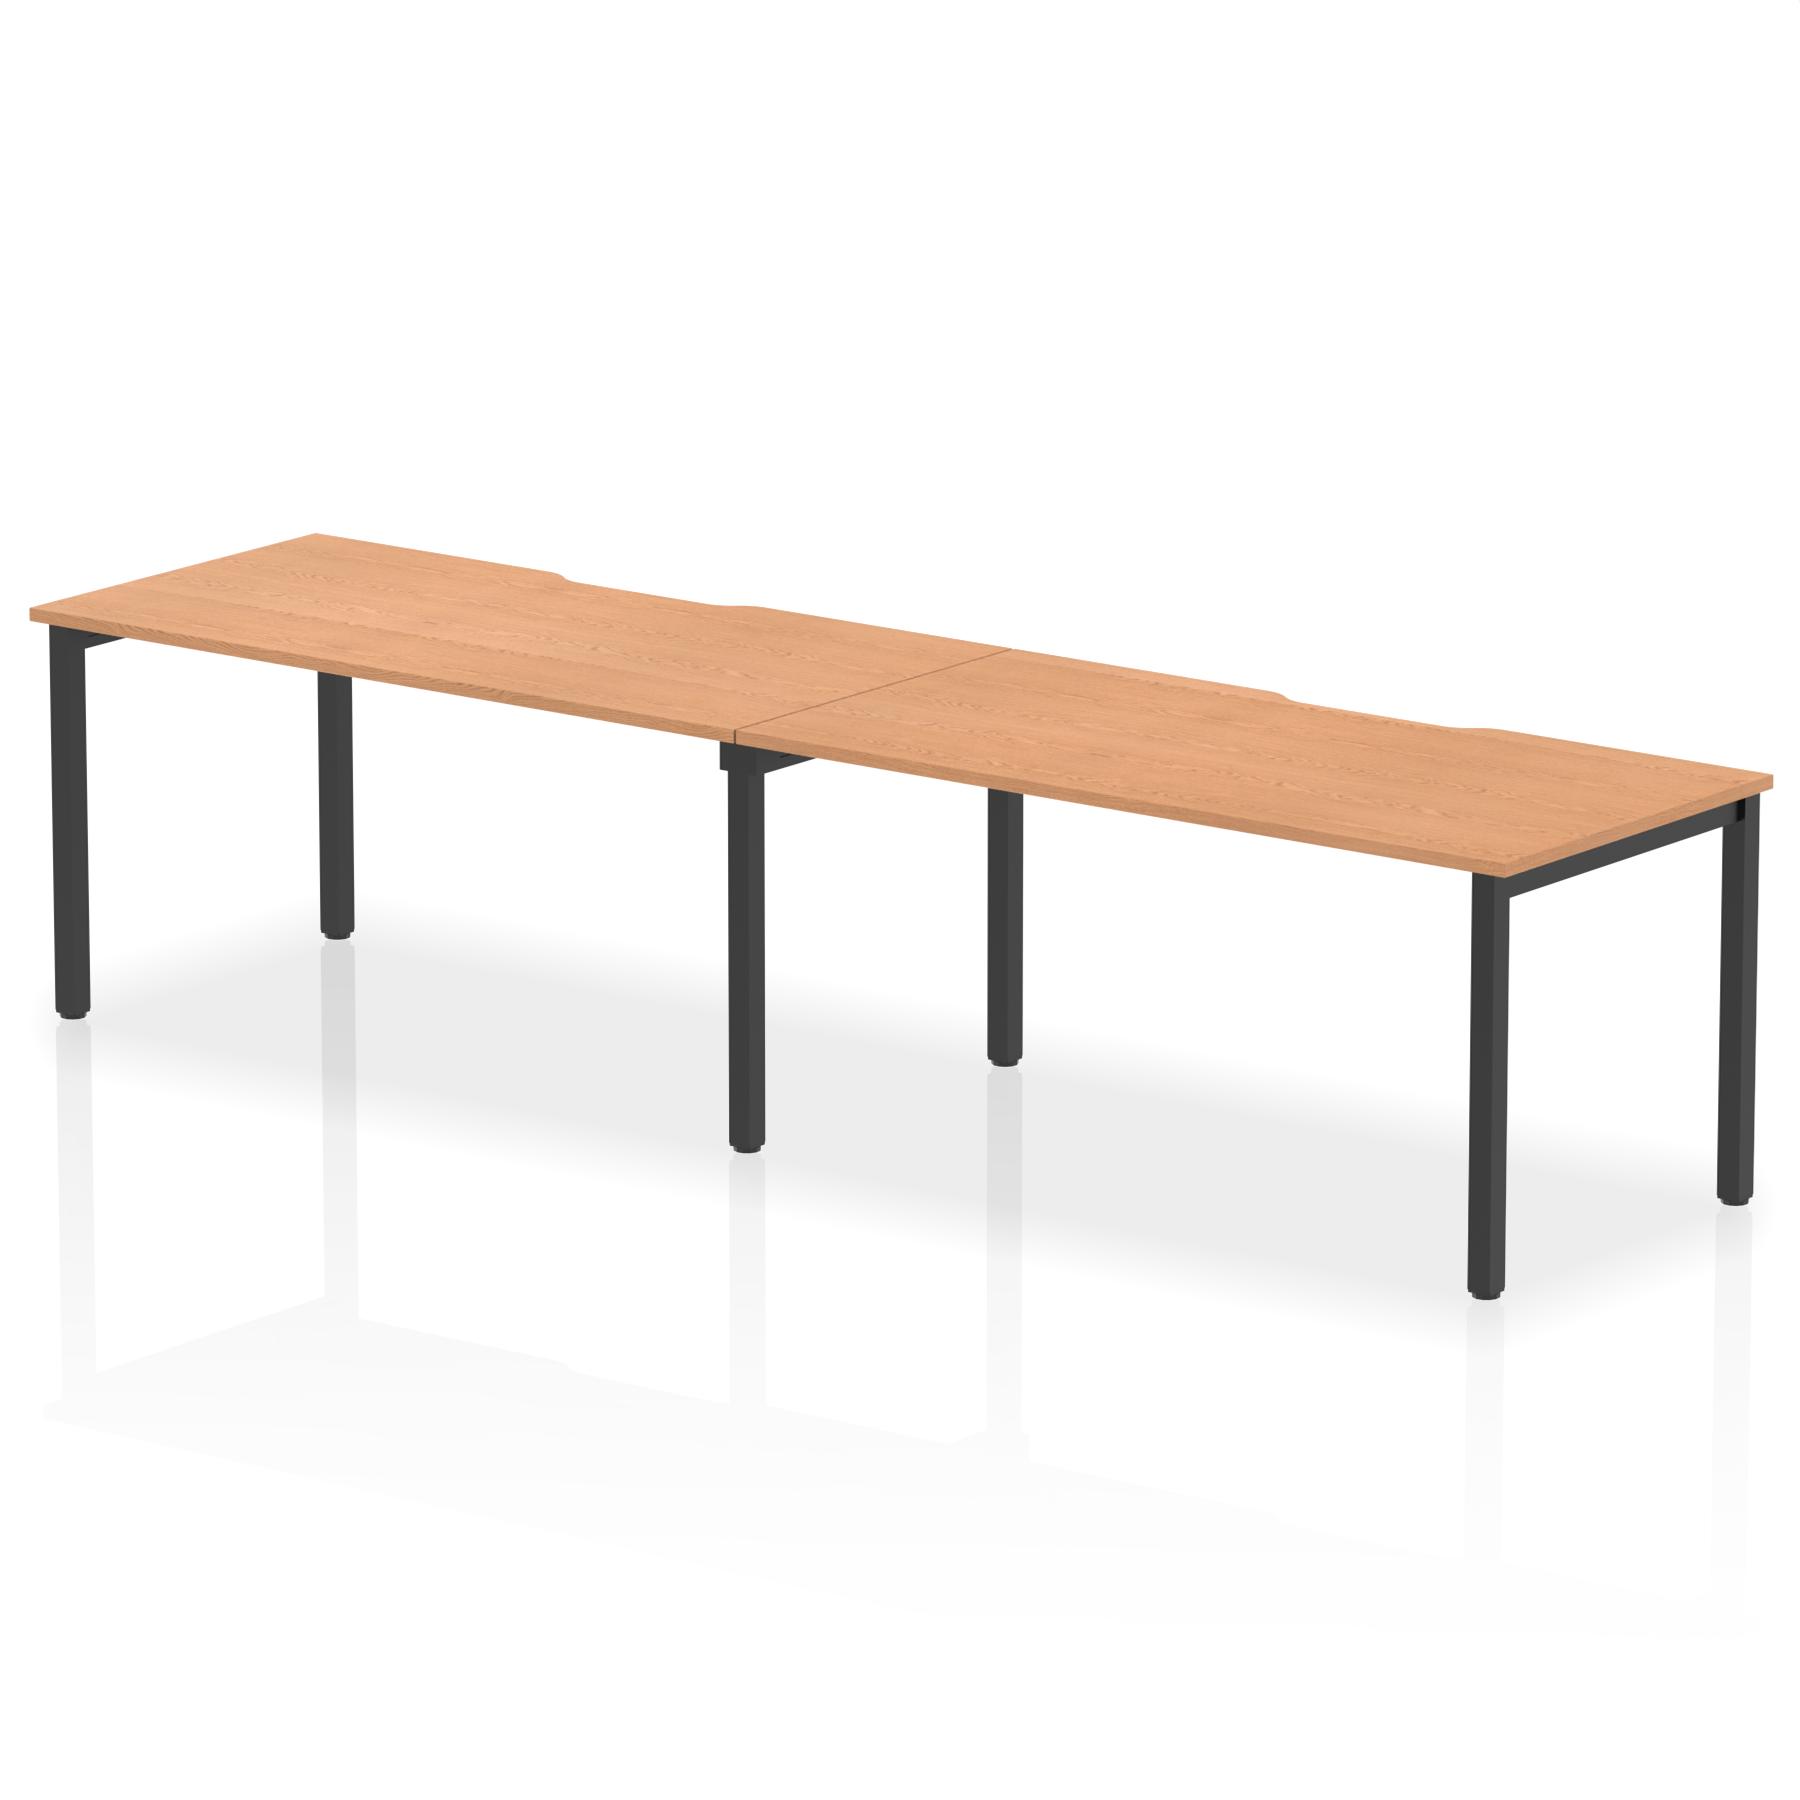 Evolve Plus Single Row Bench Desk - 2 Person